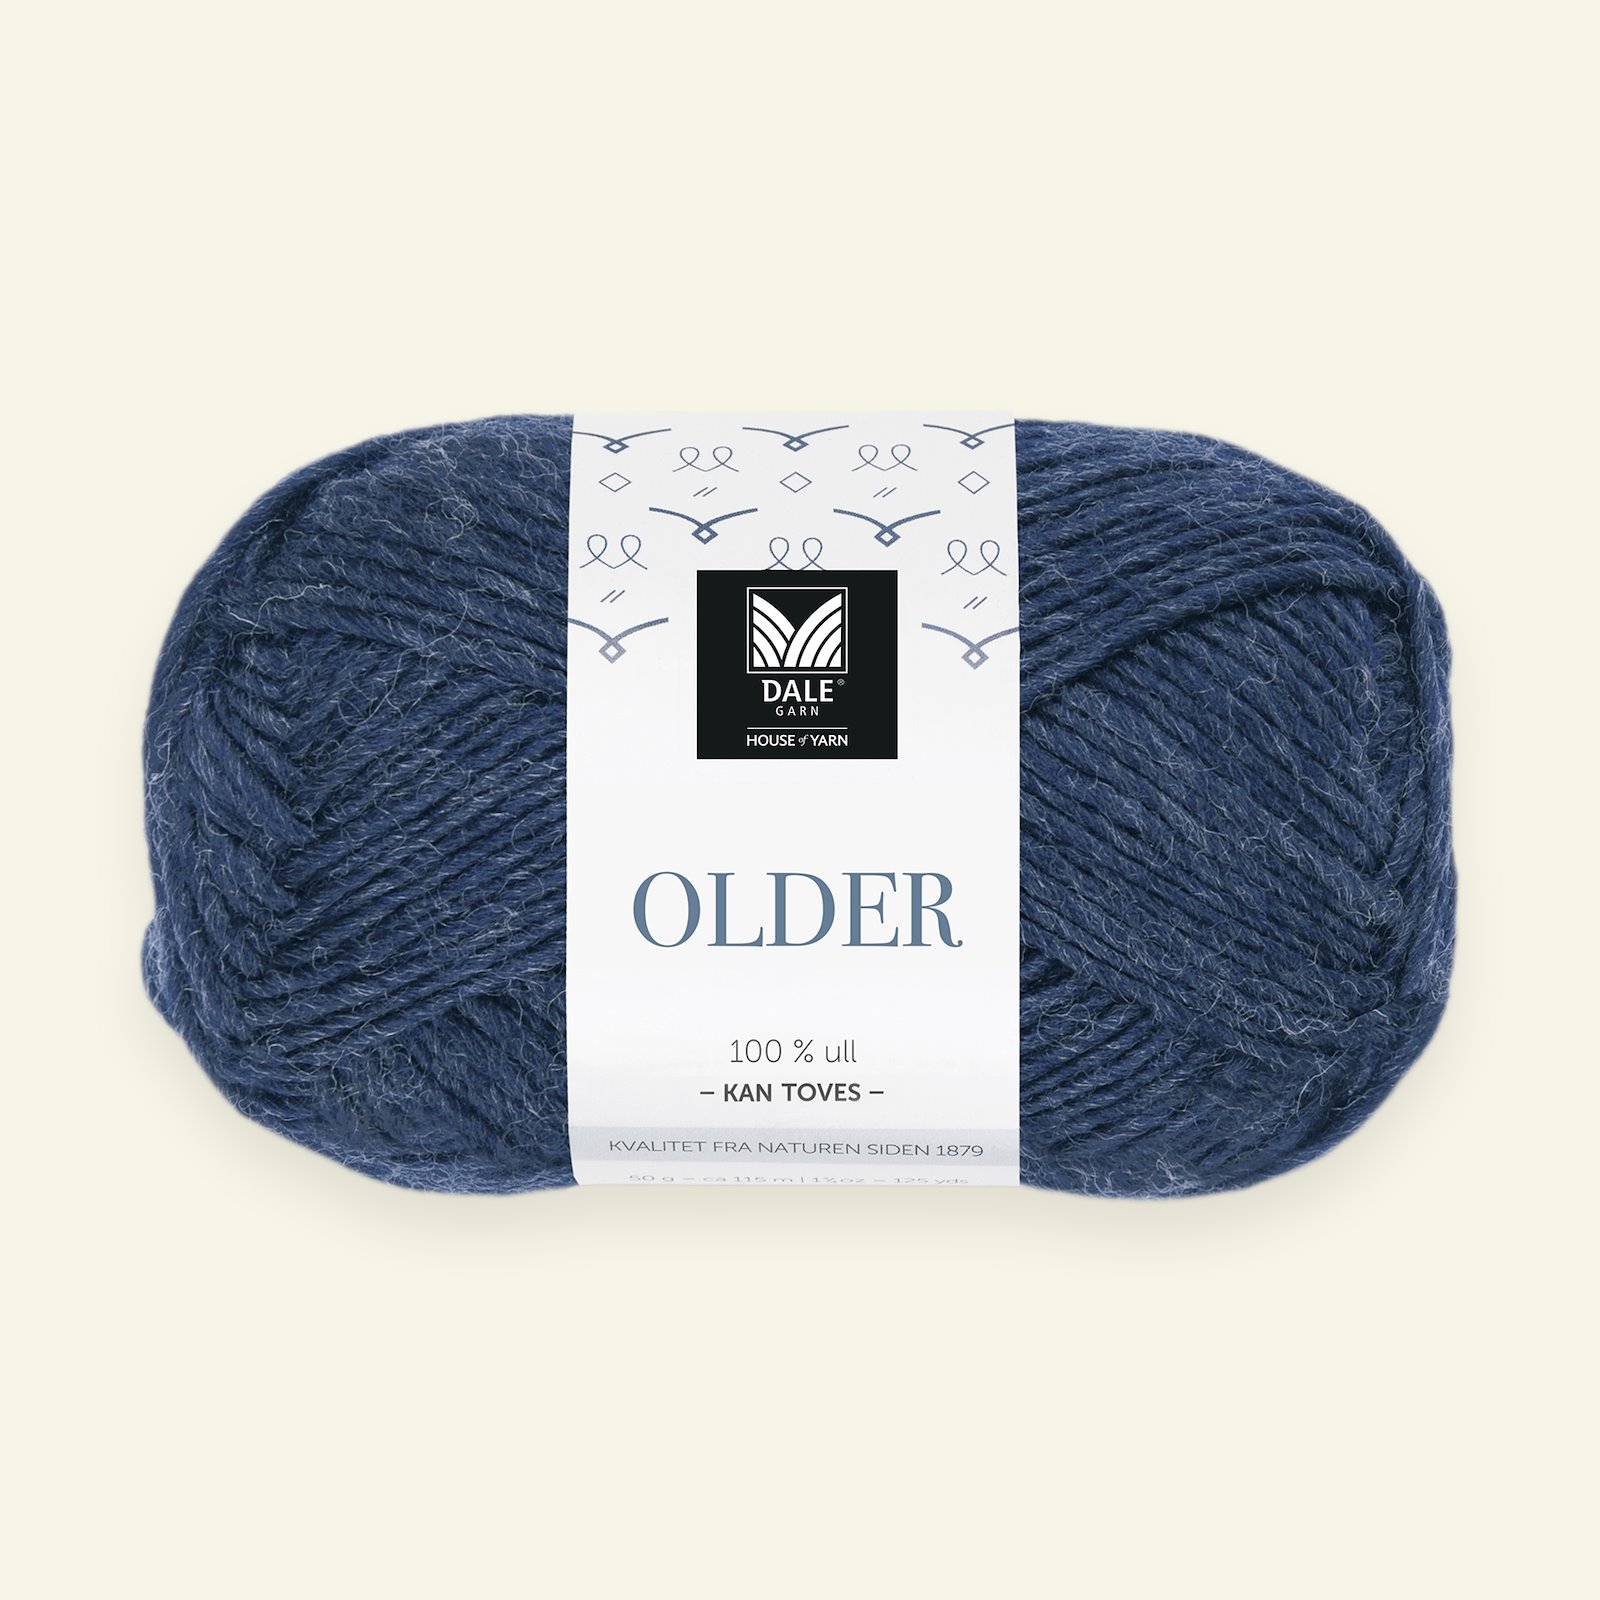 Dale Garn, 100% wool yarn "Older", blå mel. (426) 90000496_pack